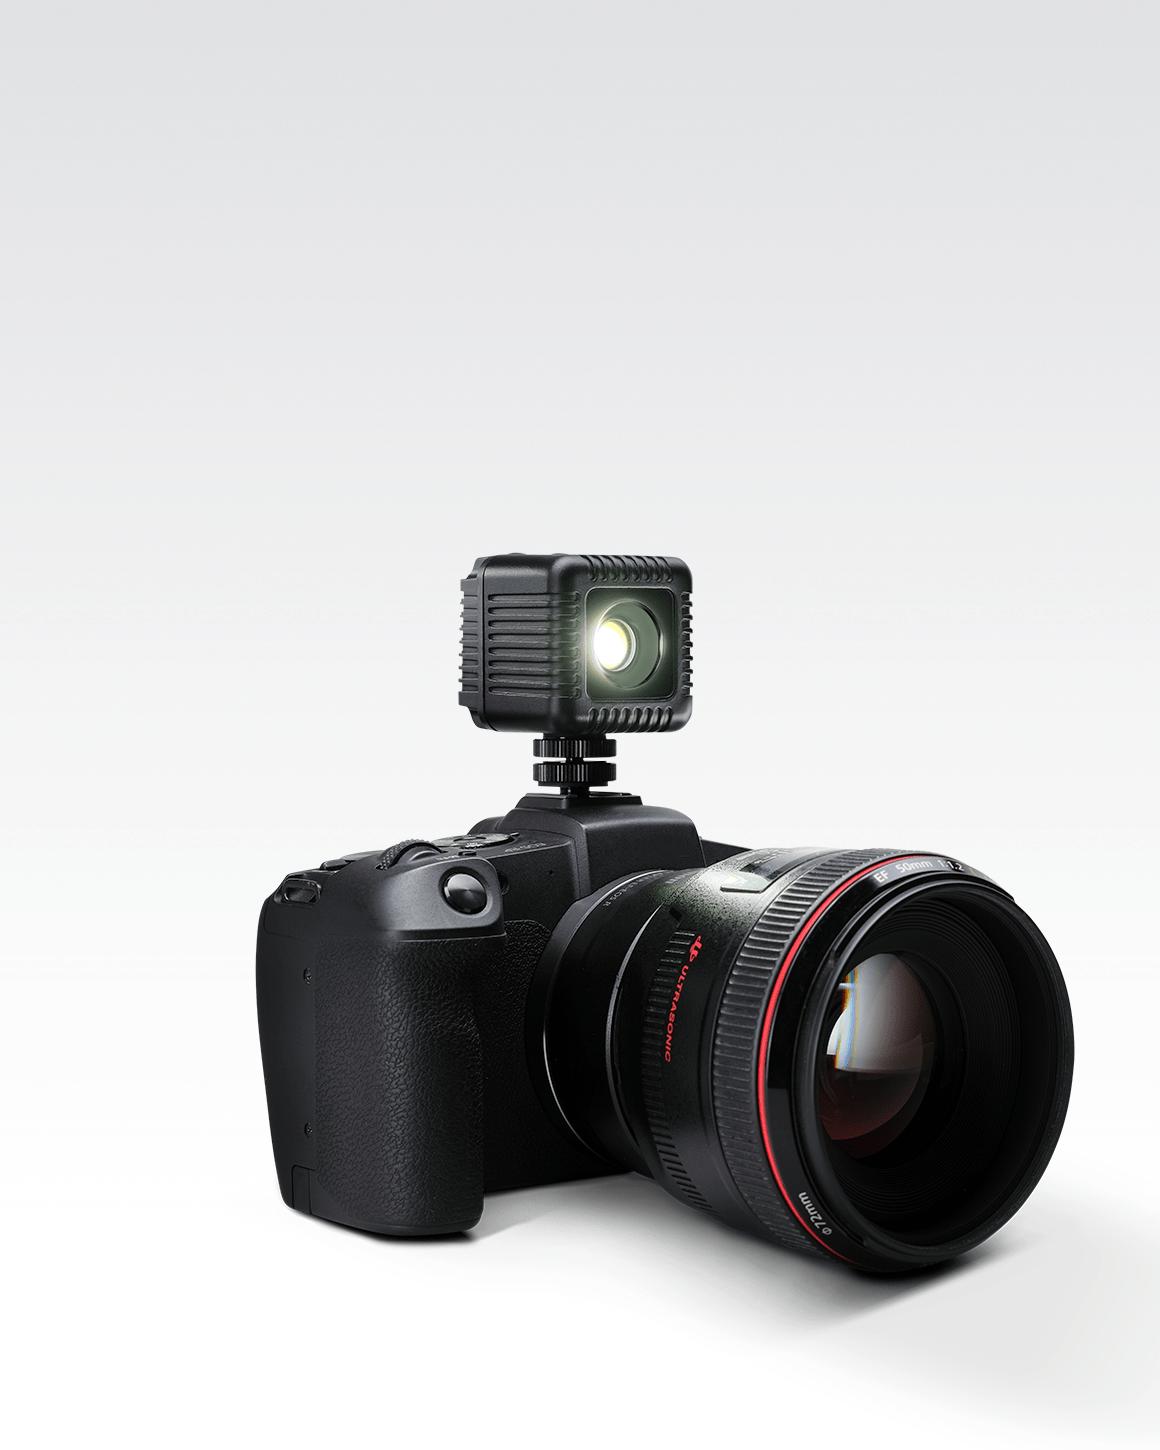 sang Stavning Vuggeviser Lume Cube 2.0 Professional Photo & Video Lighting Kit